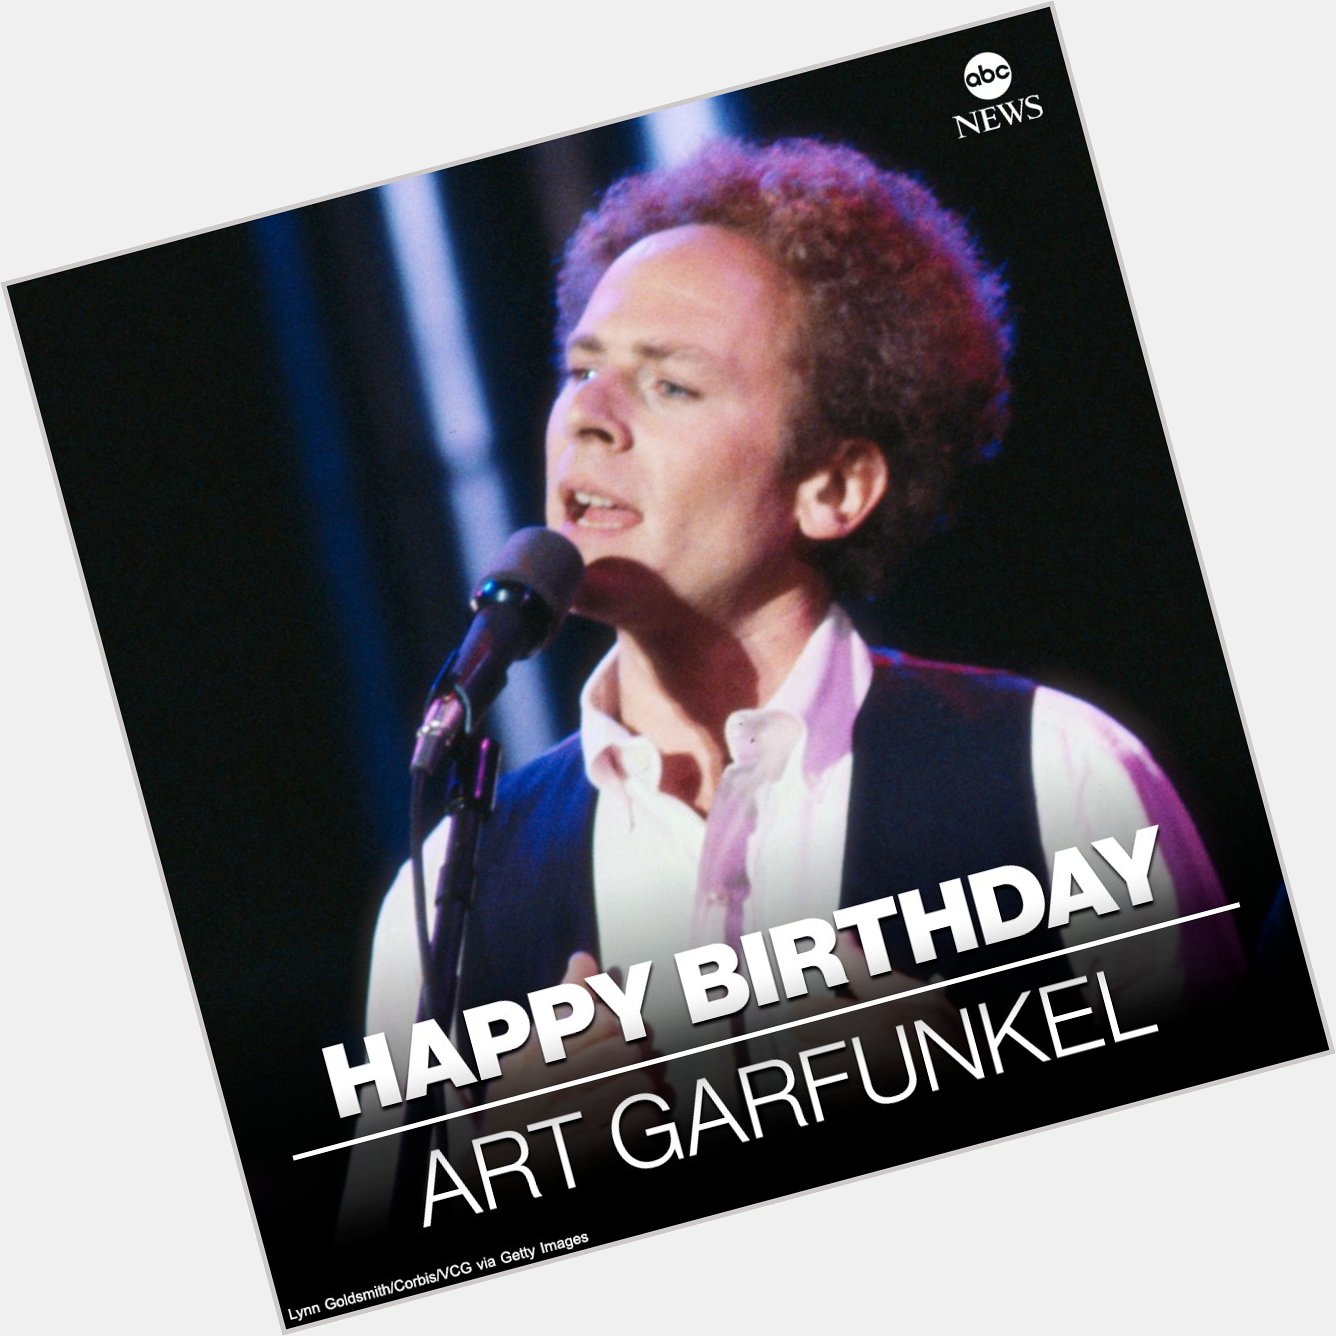 HAPPY BIRTHDAY: Singer Art Garfunkel is 80 today.  